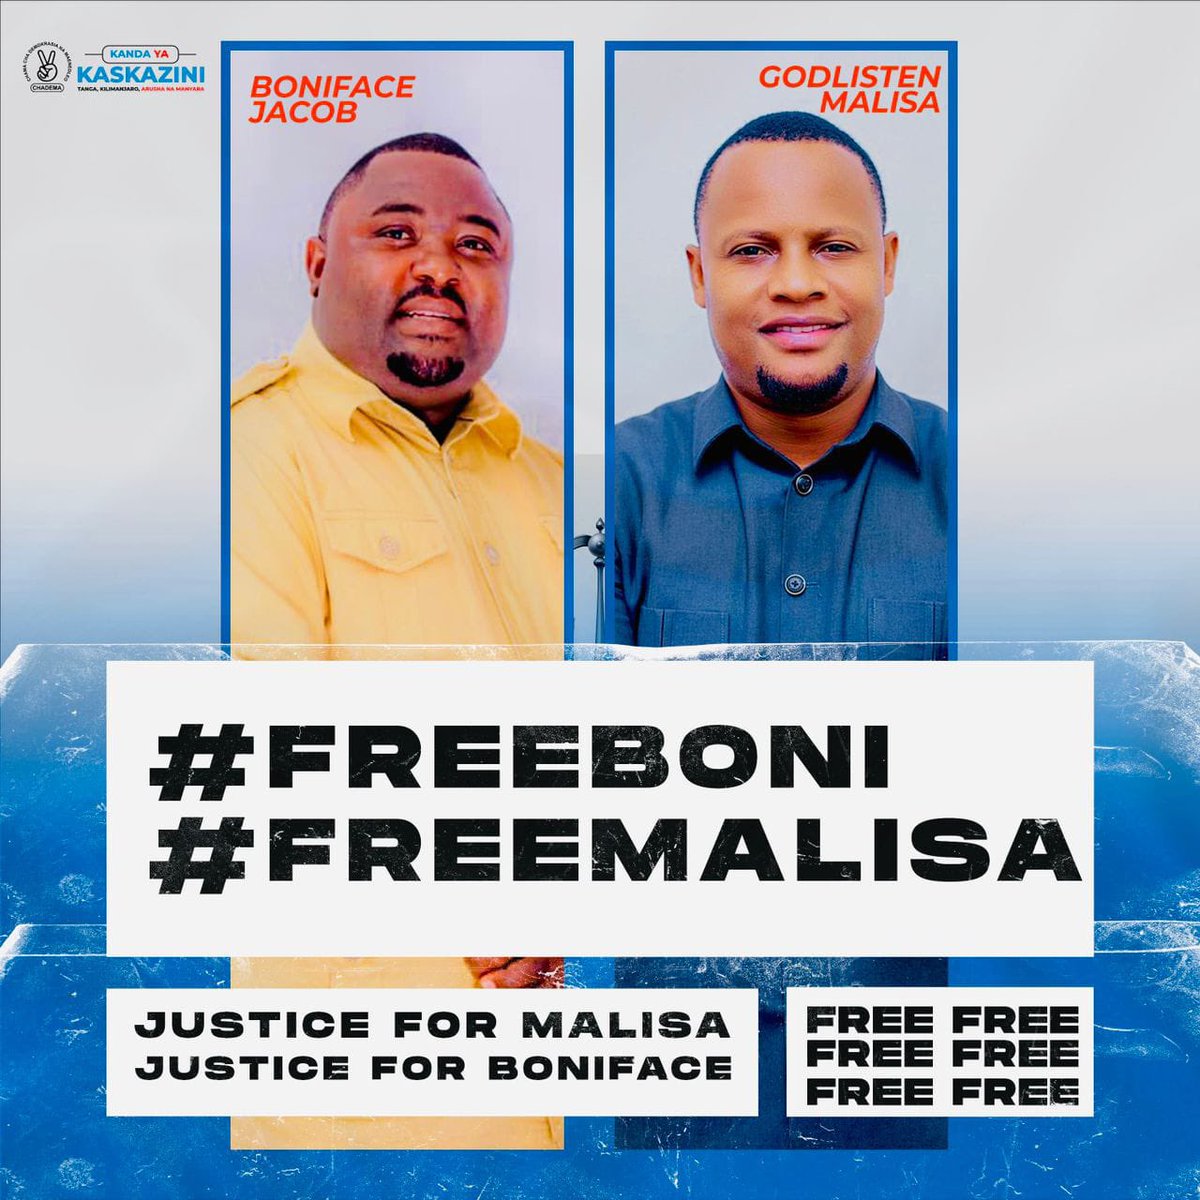 No neutrality when injustice prevails 

#freeboni
#freemalisa